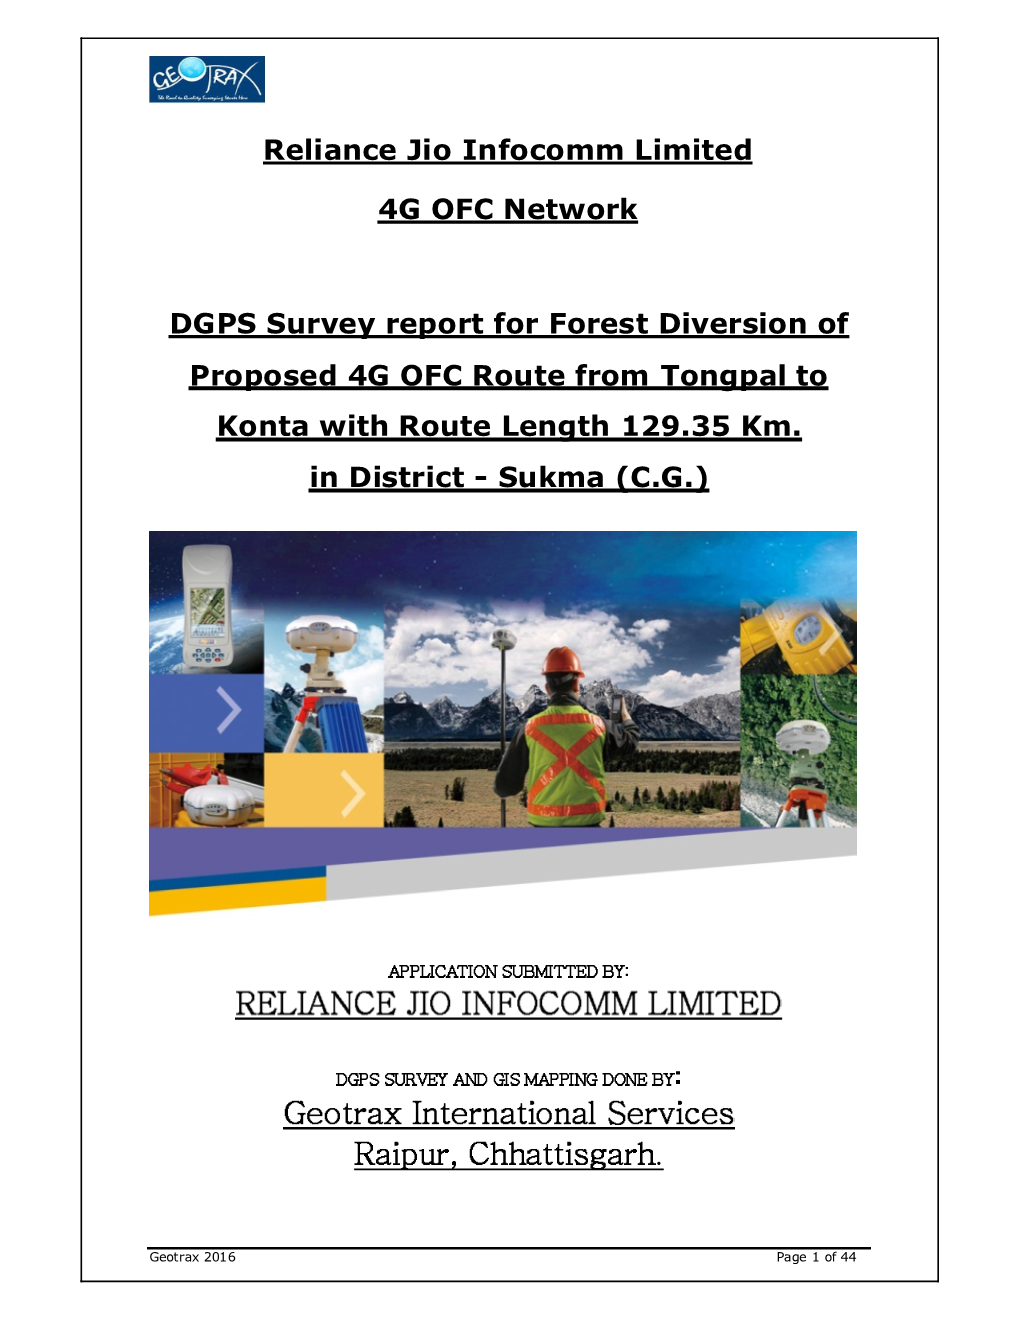 Reliance Jio Infocomm Limited 4G OFC Network DGPS Survey Report